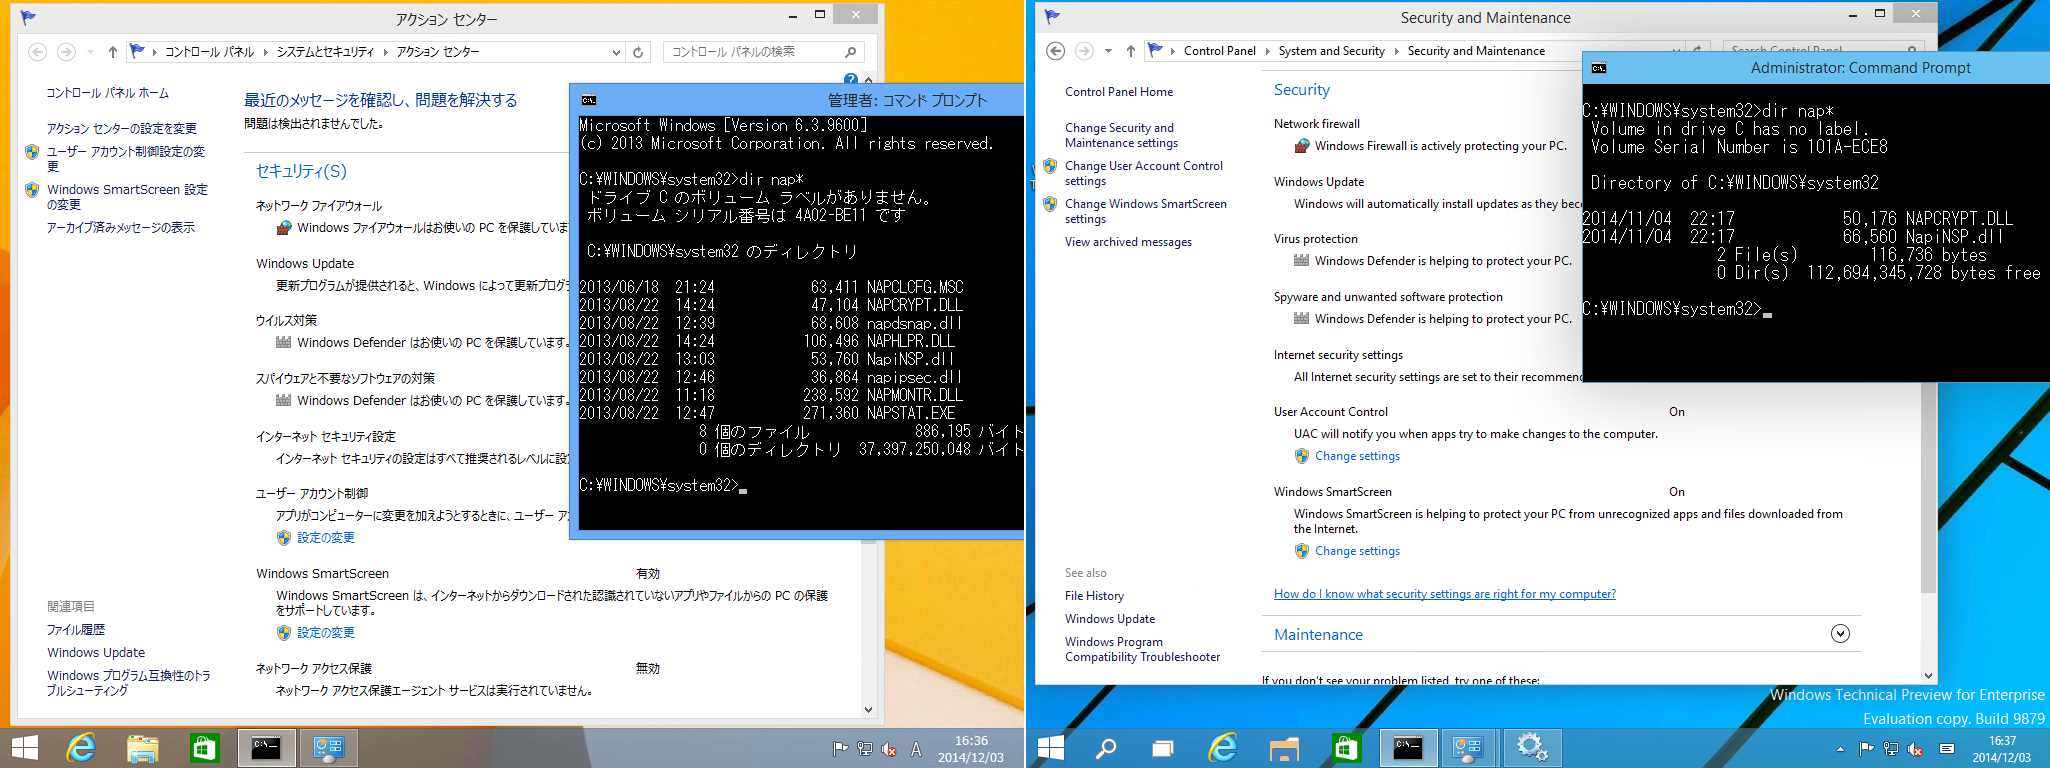 3@Windows 8.1iʍjWindows 10 Technical PreviewiʉEj́uANVZ^[vBWindows 10 Technical Previewɂ́ulbg[NANZXیv̍ڂ݂ANAPNCAg̊֘AR|[lgiuNAPCLCFG.MSCvȂǁj݂Ȃ